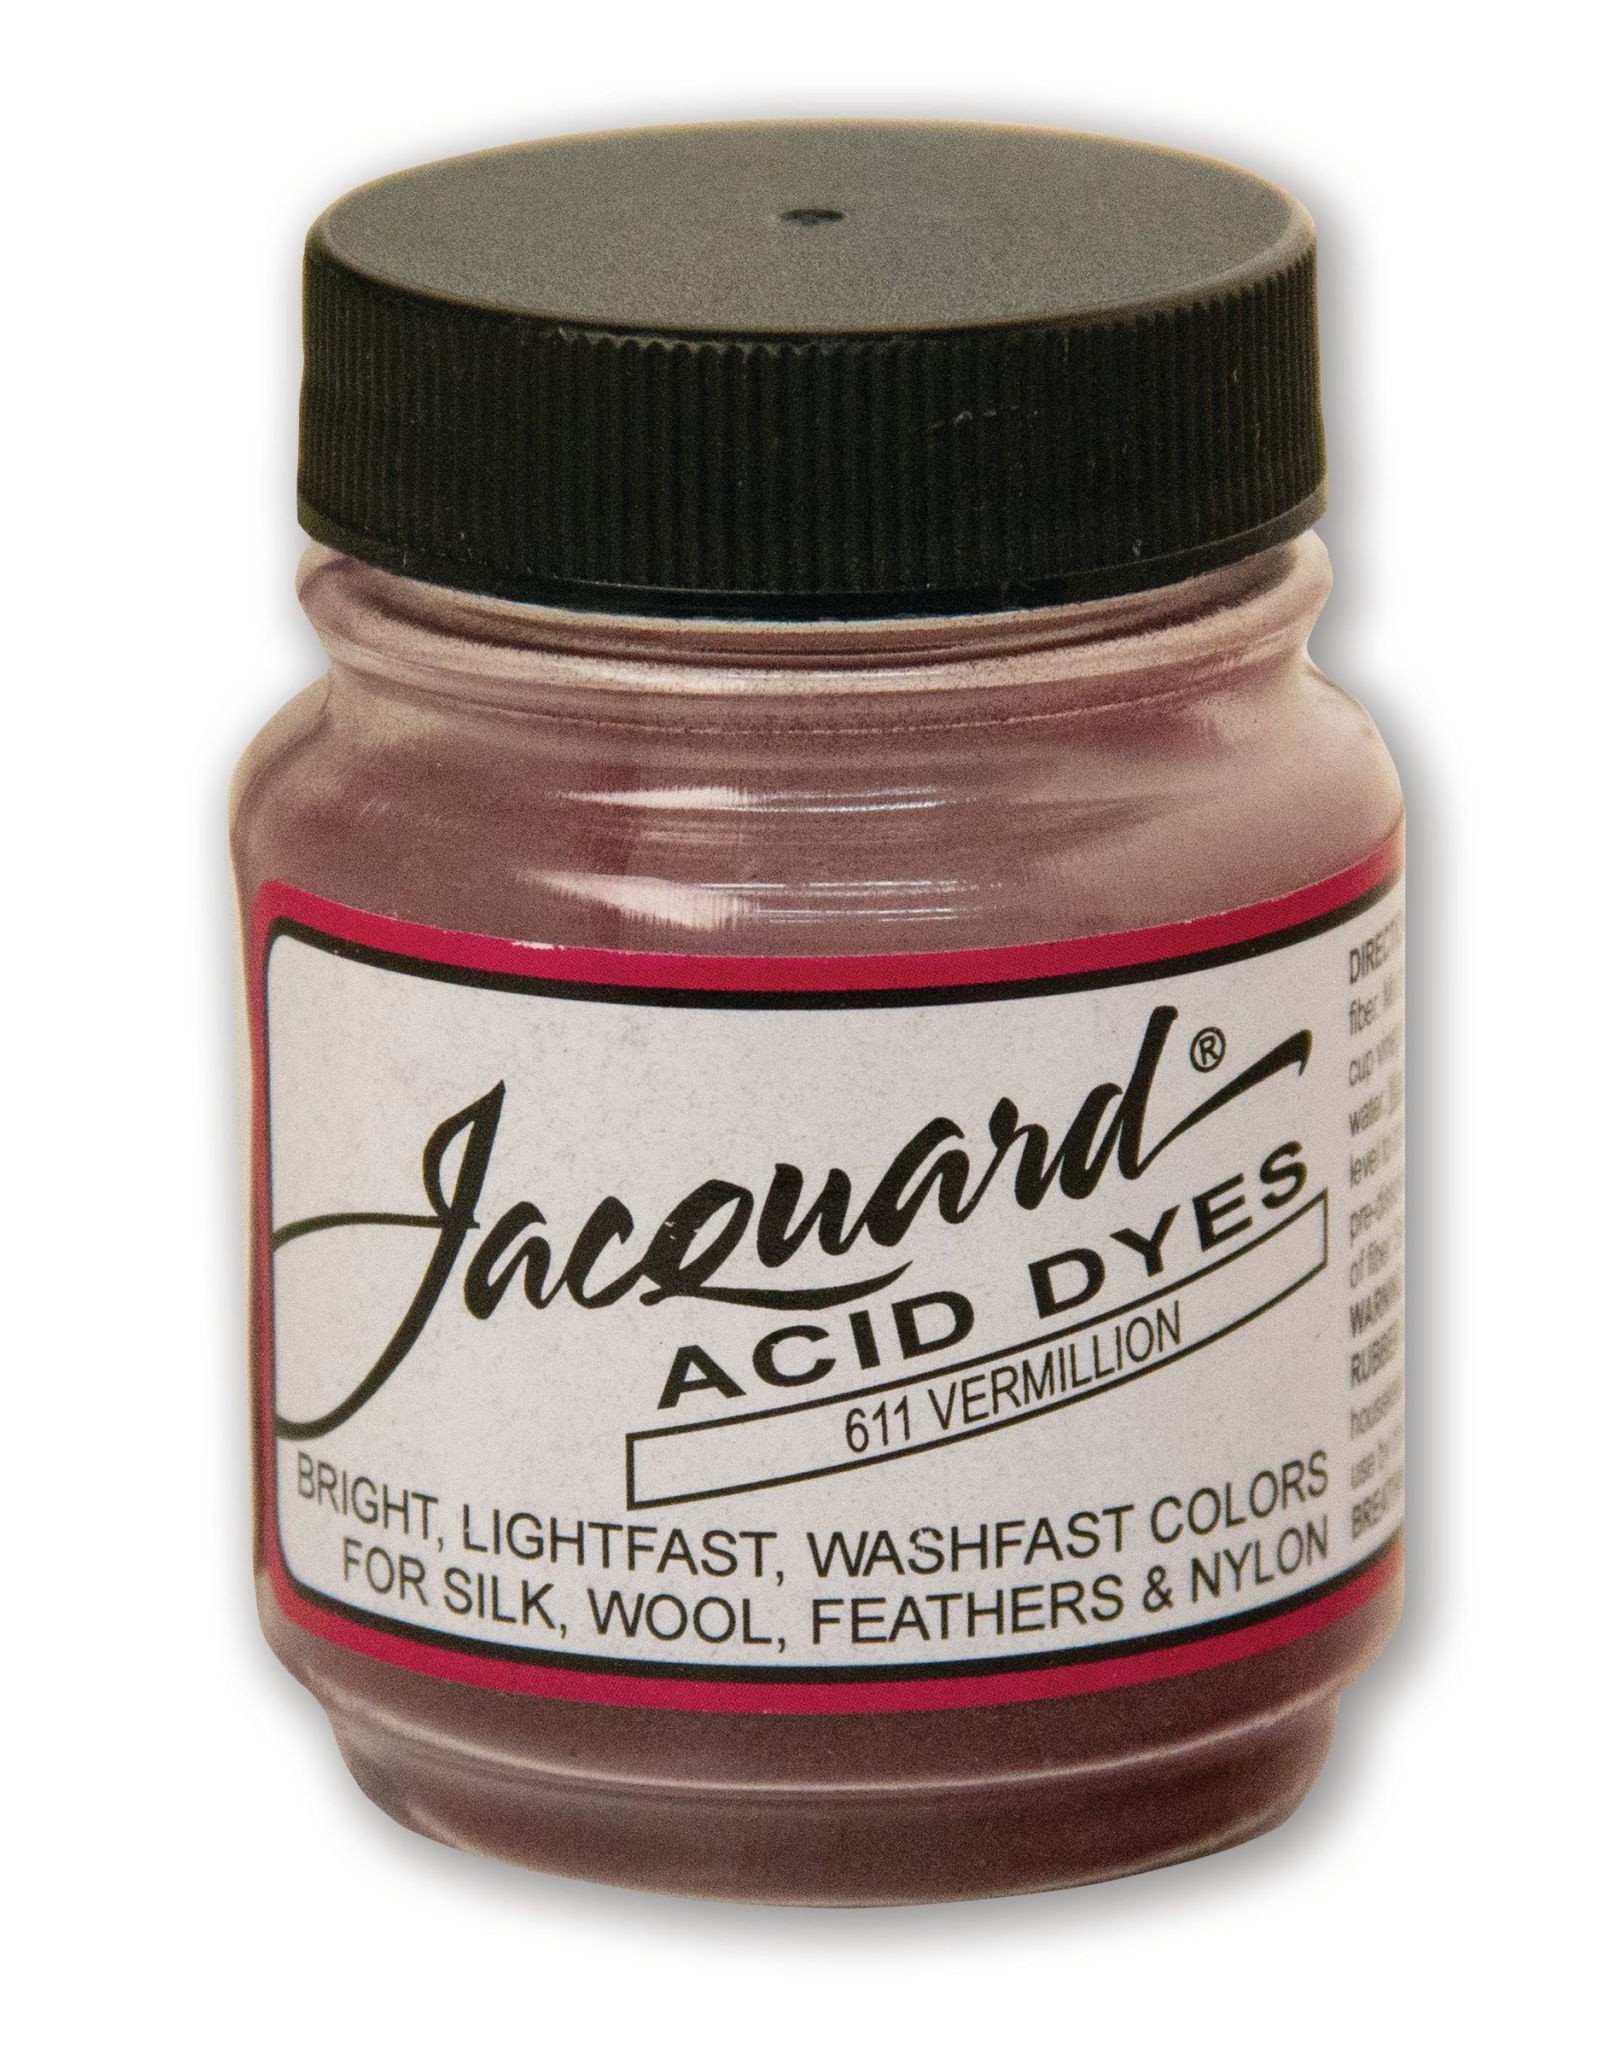 Jacquard Jacquard Acid Dye, #611 Vermilion ½oz